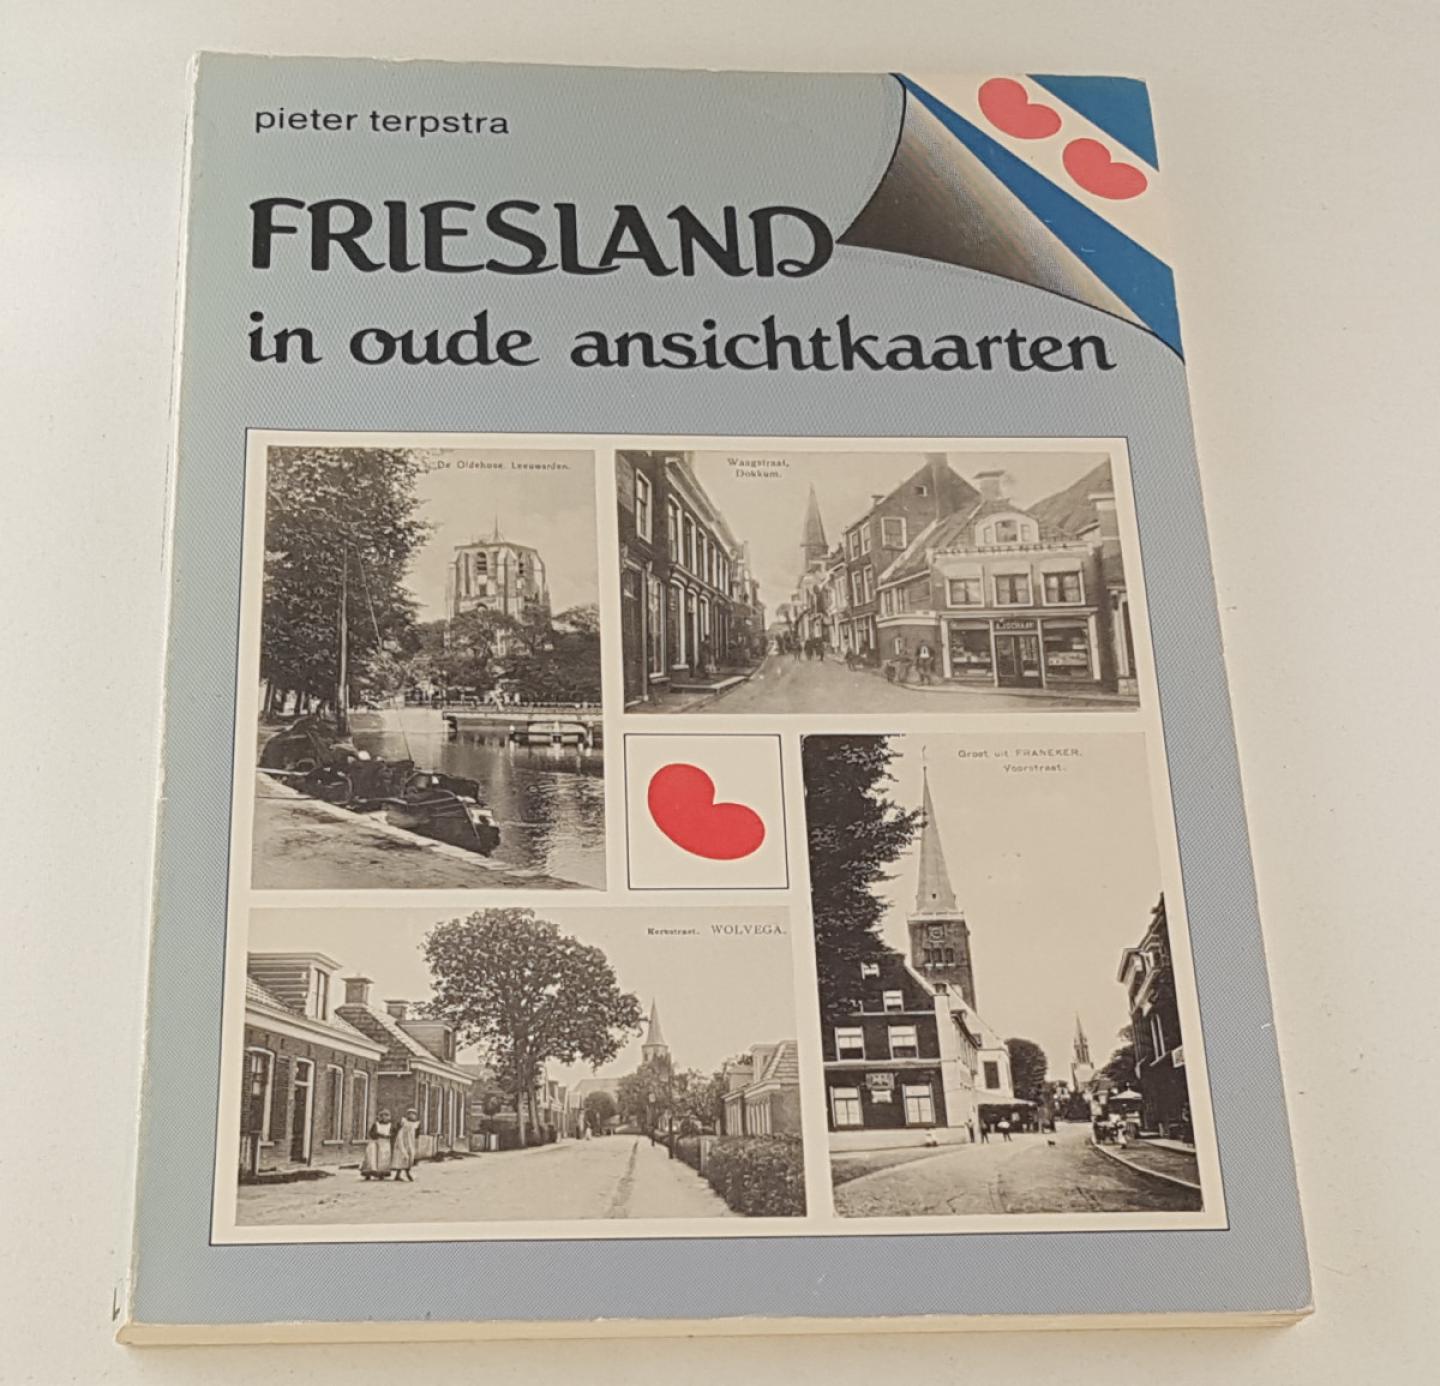 Terpstra, Pieter - Friesland in oude ansichtkaarten